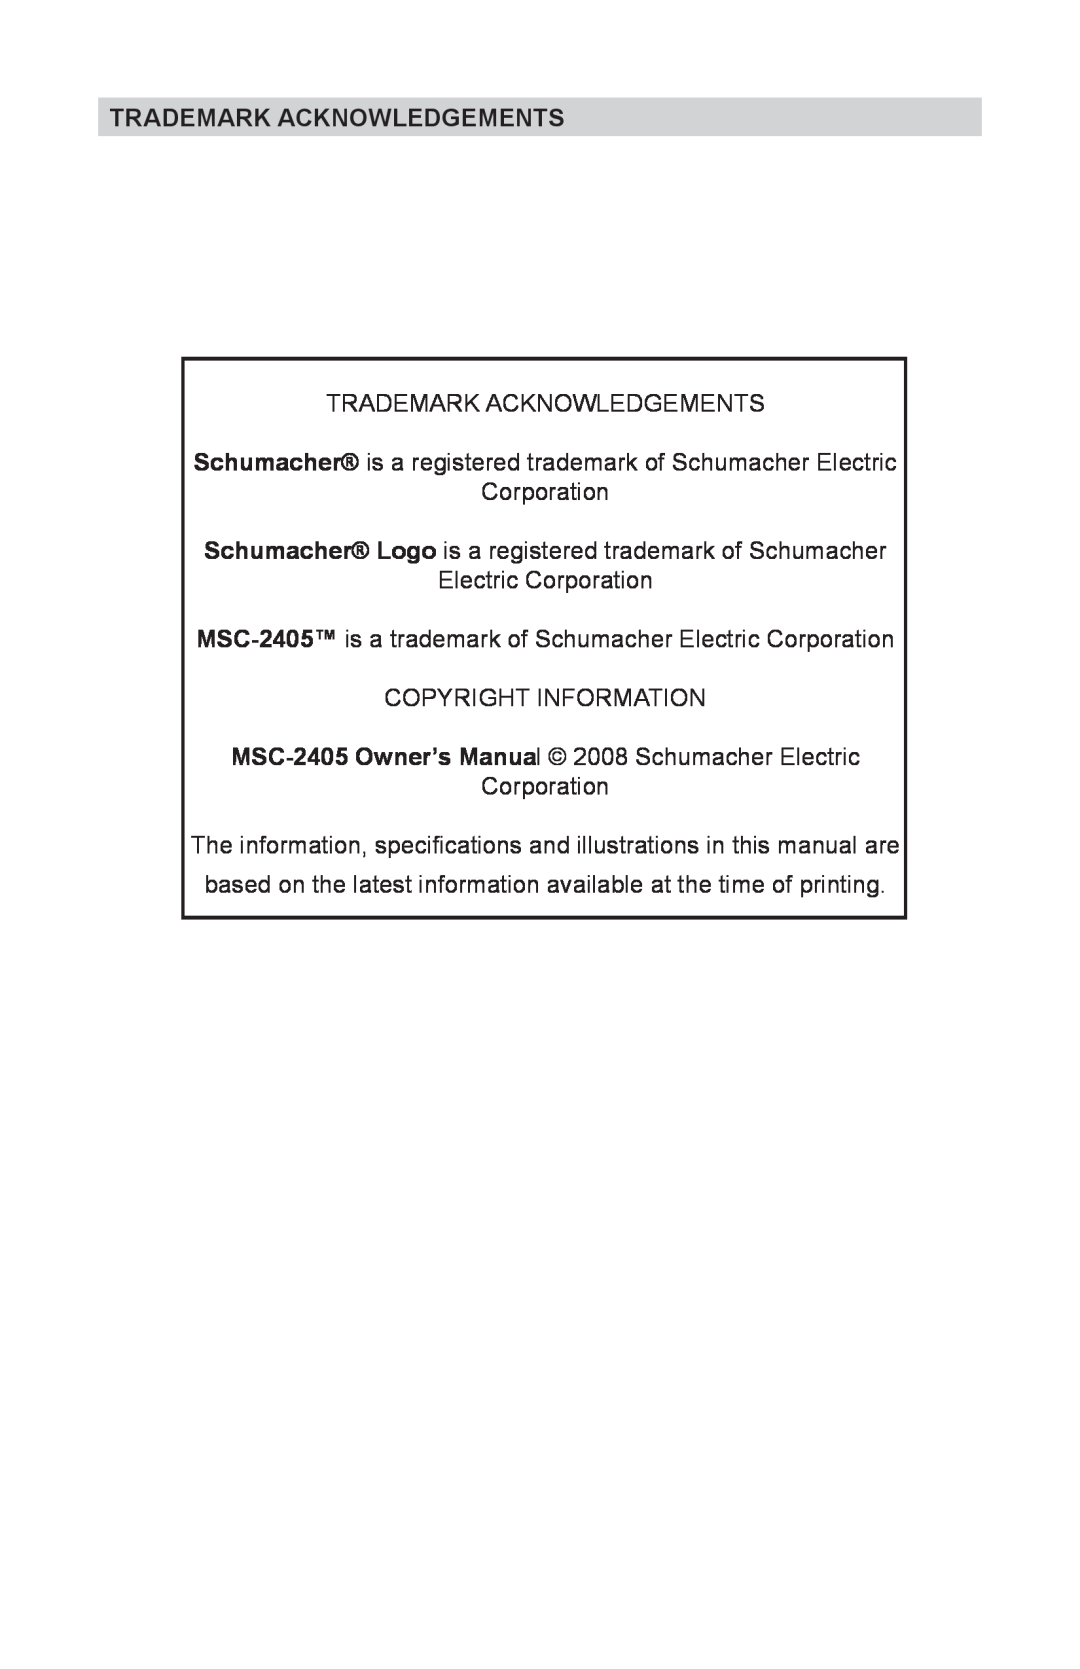 Schumacher MSC-2405 owner manual Trademark Acknowledgements 